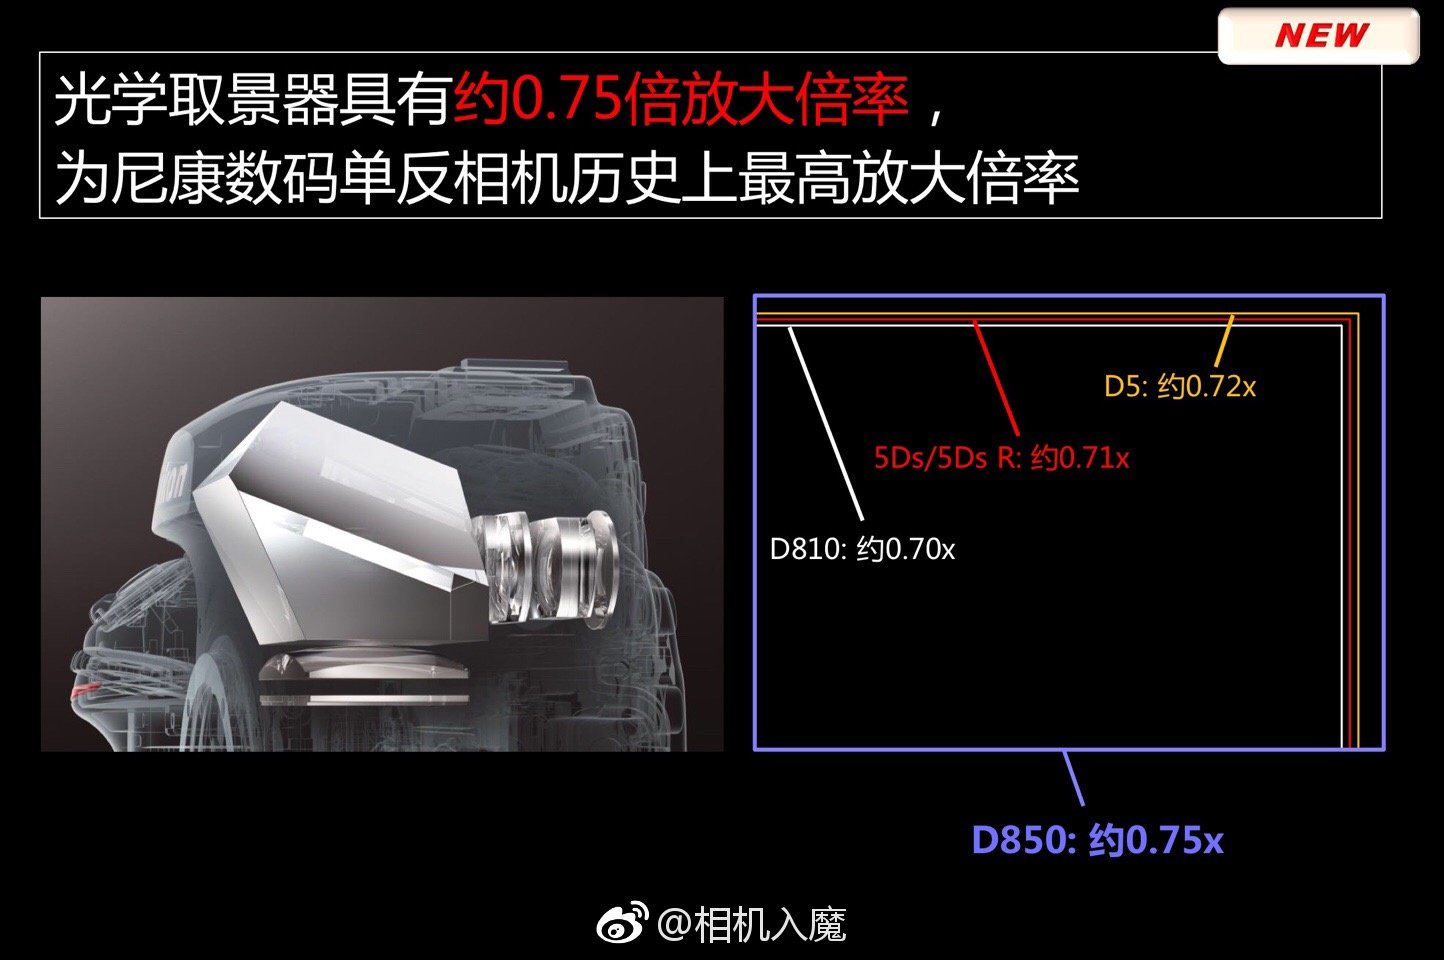 Nikon-D850-presentation-slides6_tinhte.vn.jpg